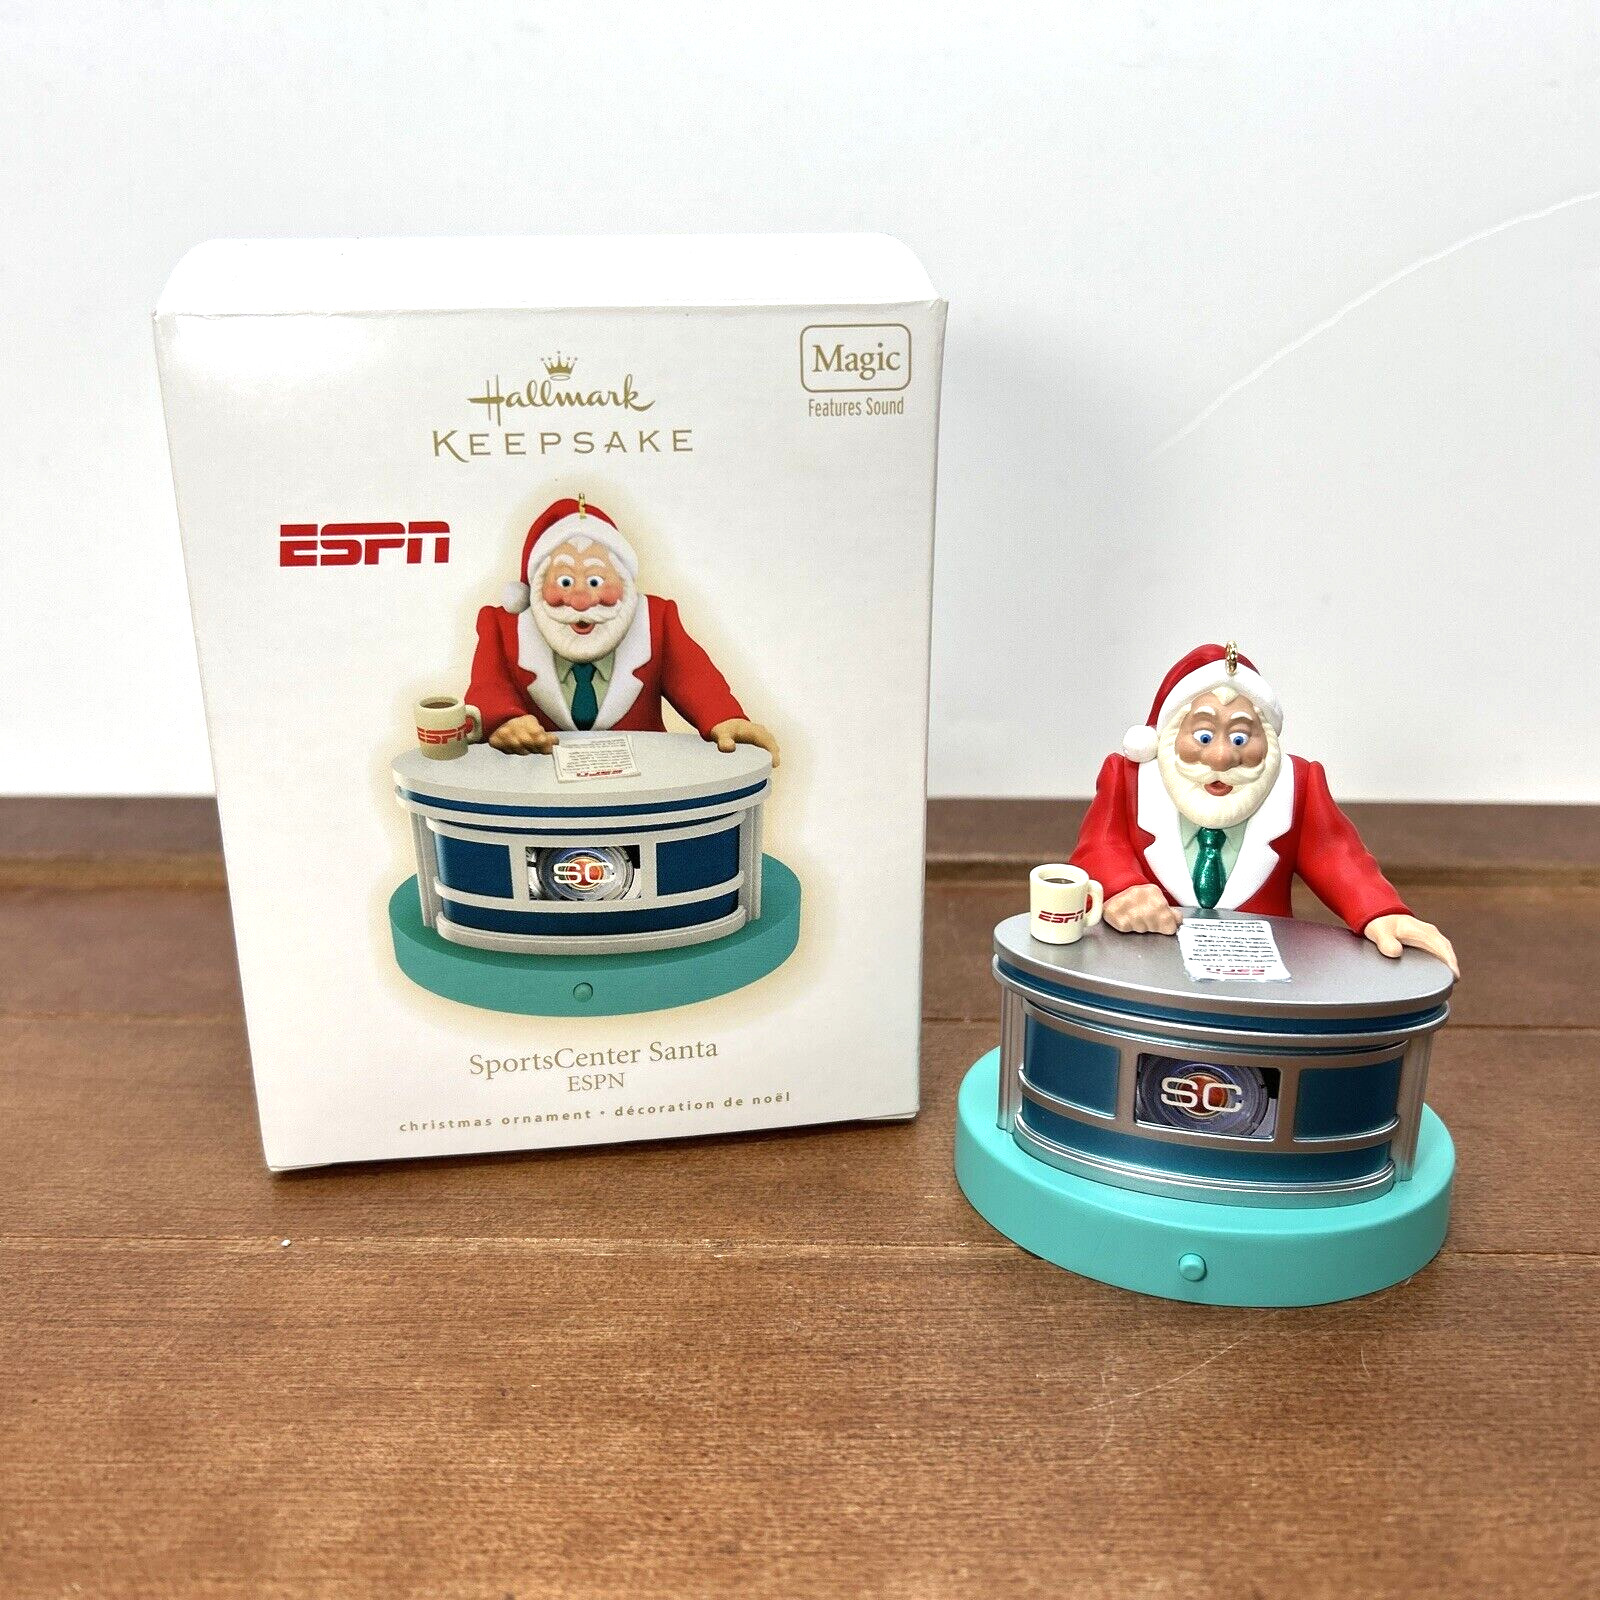 2009 Hallmark ESPN SportsCenter Santa Claus Christmas Ornament With Sound